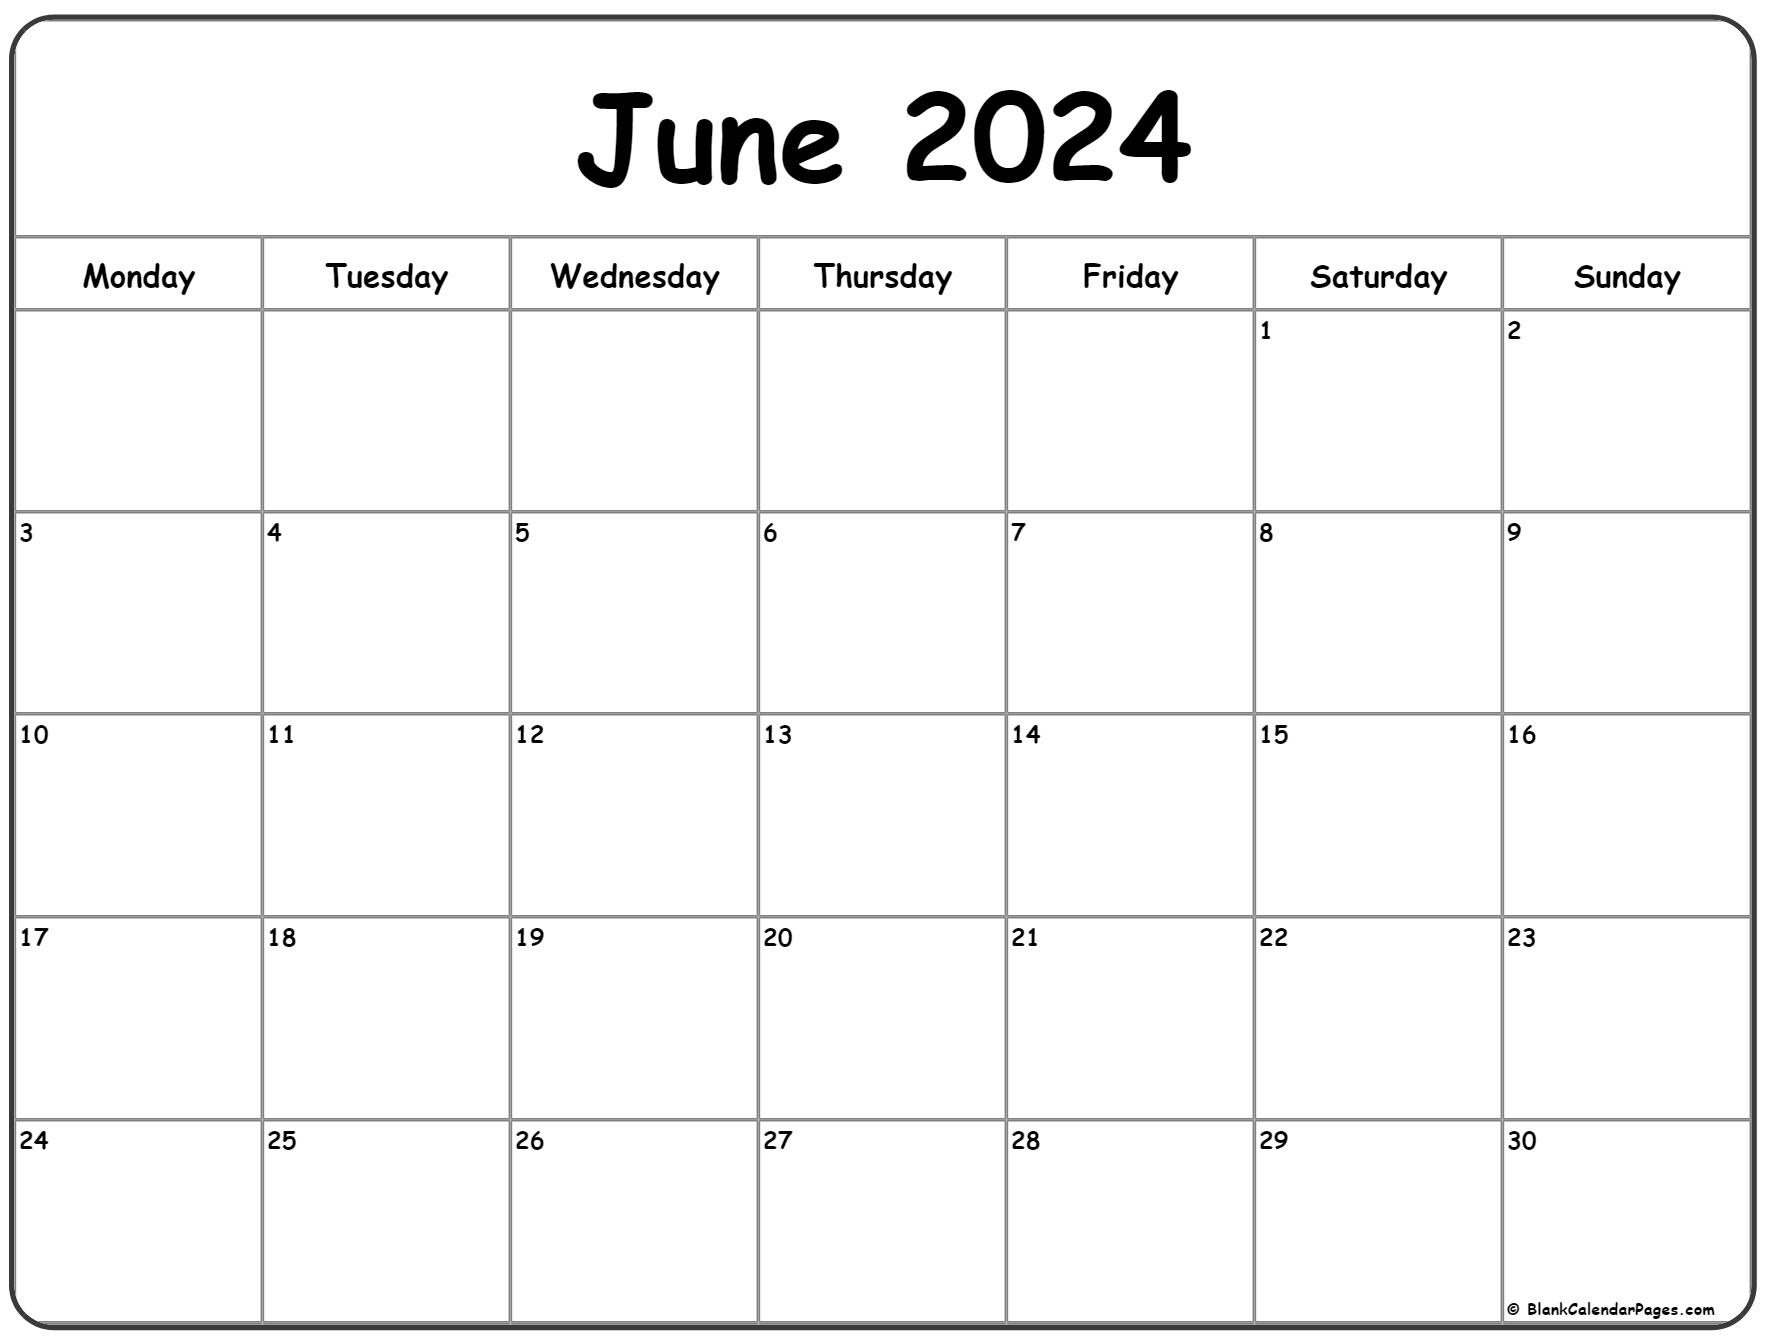 June 2024 Monday Calendar | Monday To Sunday regarding Calendar For June 2024